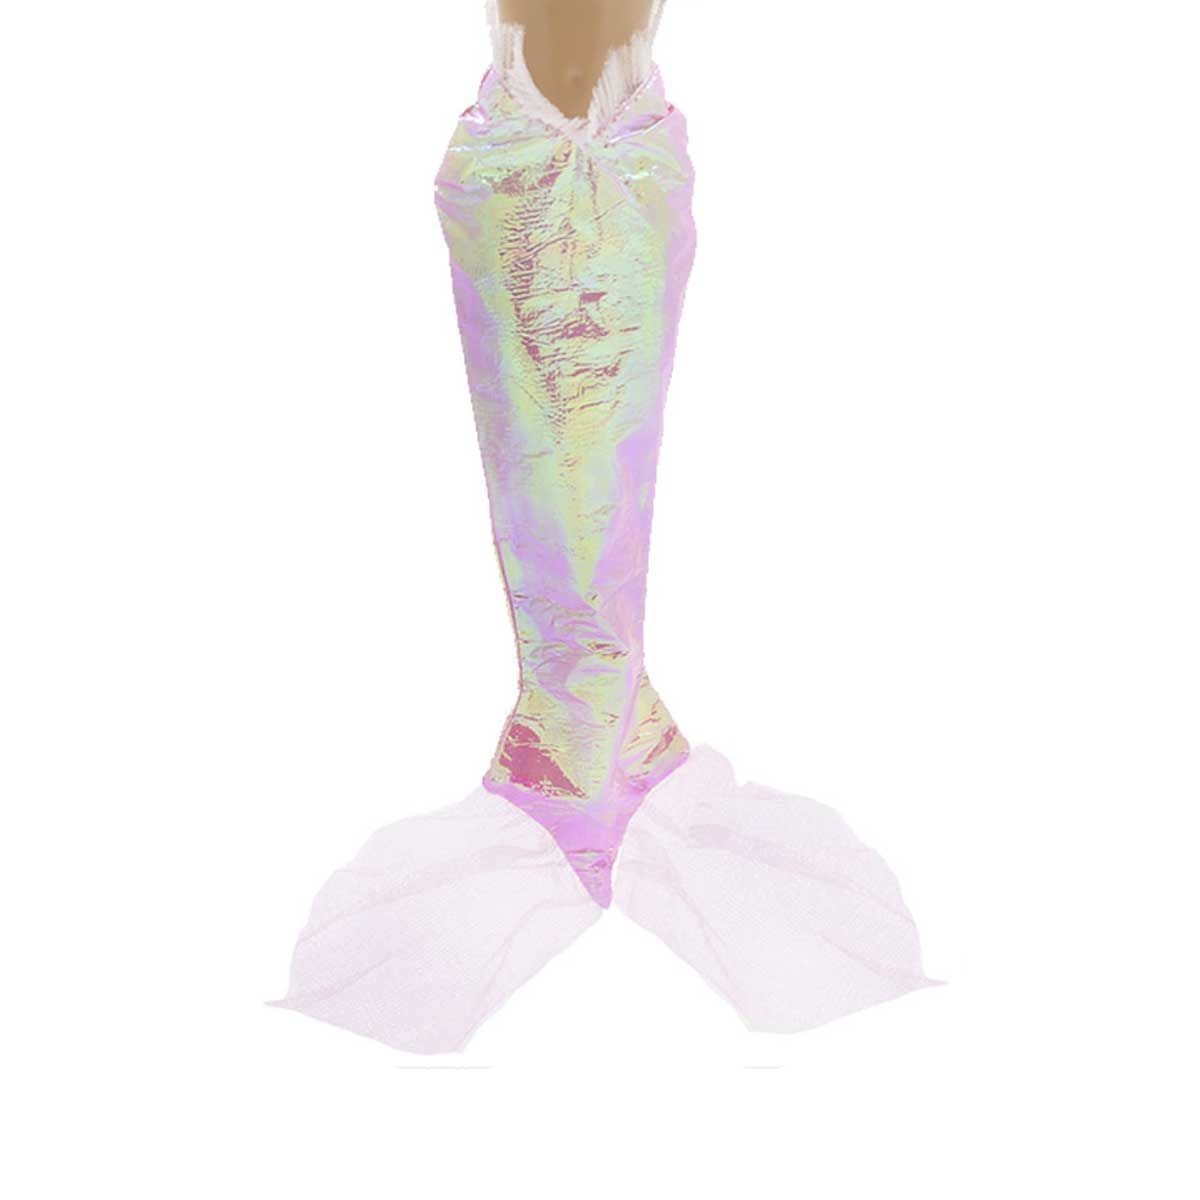 Хвост русалки Dolls Accessories для Барби и кукол 29 см пенал хвост русалки розово зелёный